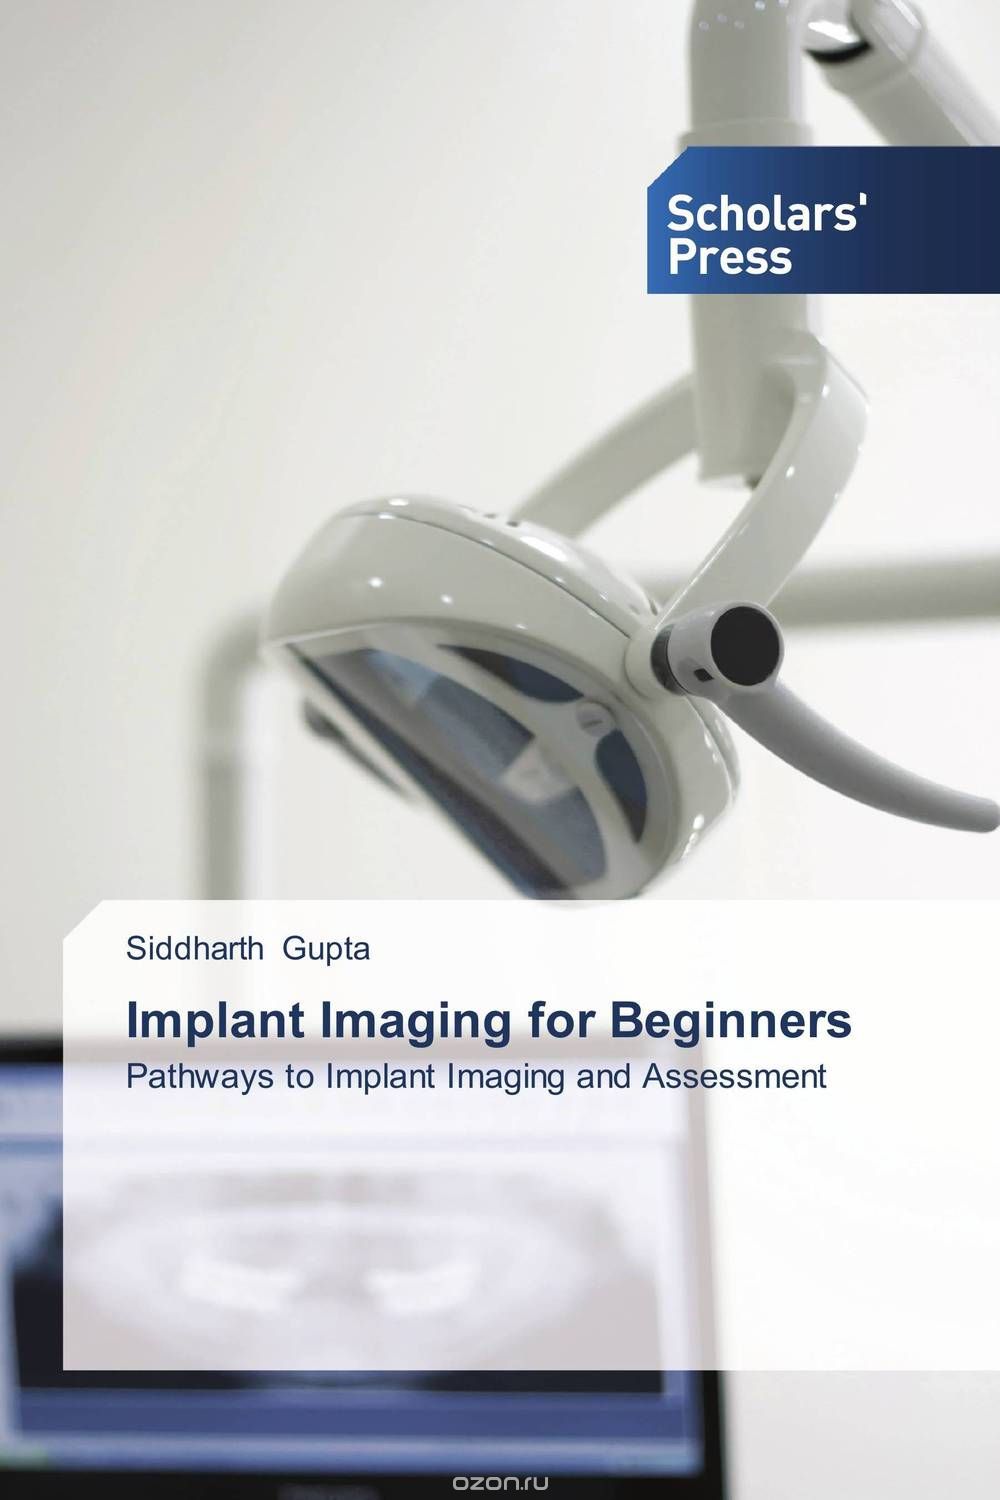 Скачать книгу "Implant Imaging for Beginners"